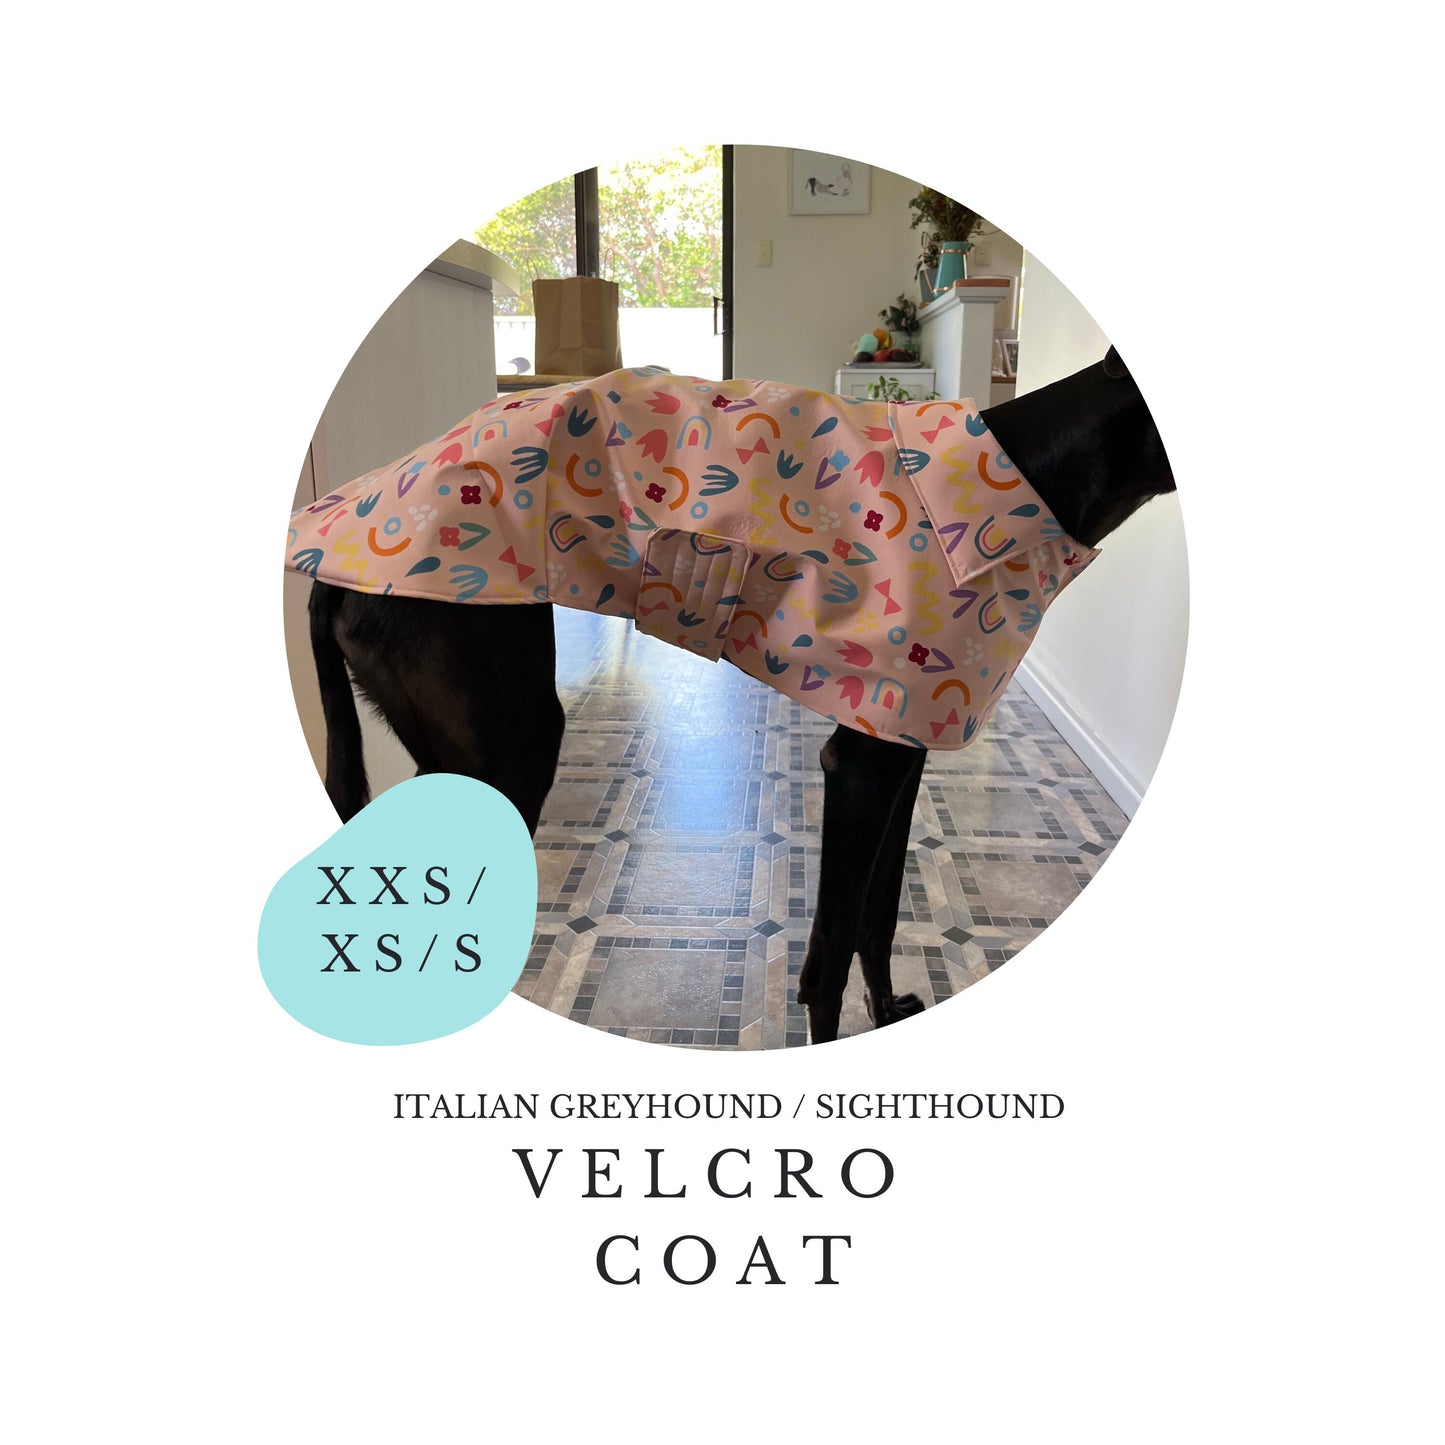 XXS/XS/S Italian Greyhound Velcro Coat